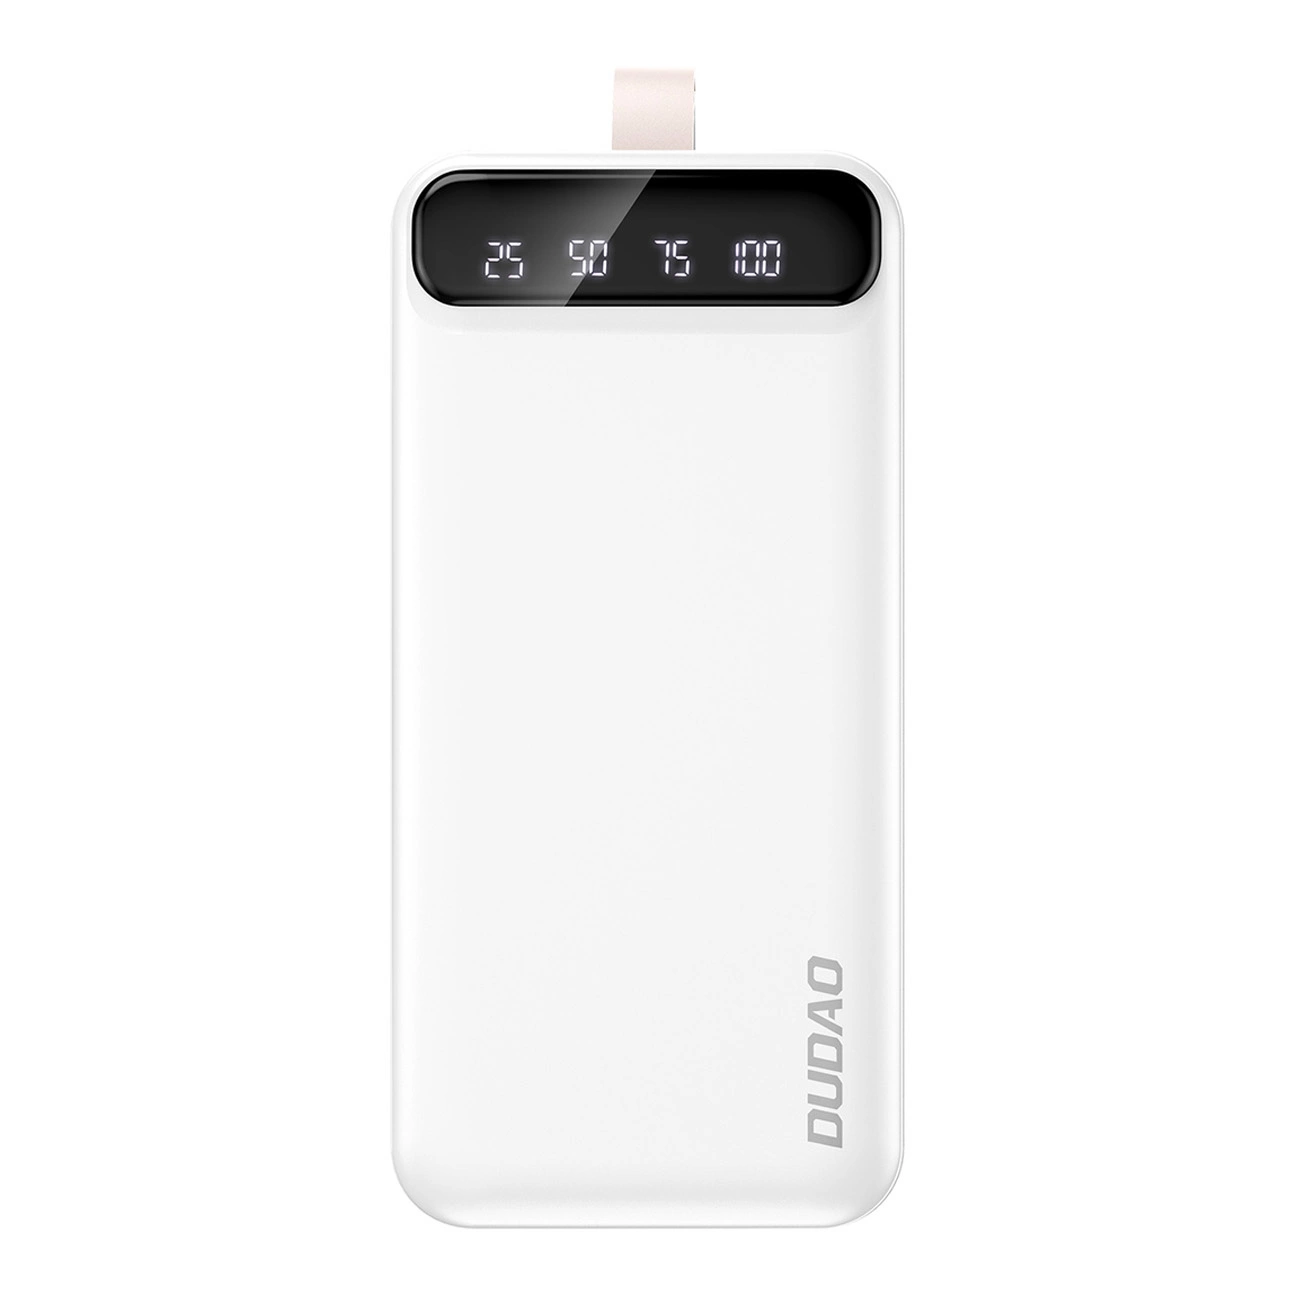 Dudao powerbank 30000 mAh 2x USB / USB-C s LED světlem bílá (K8s+ bílá)